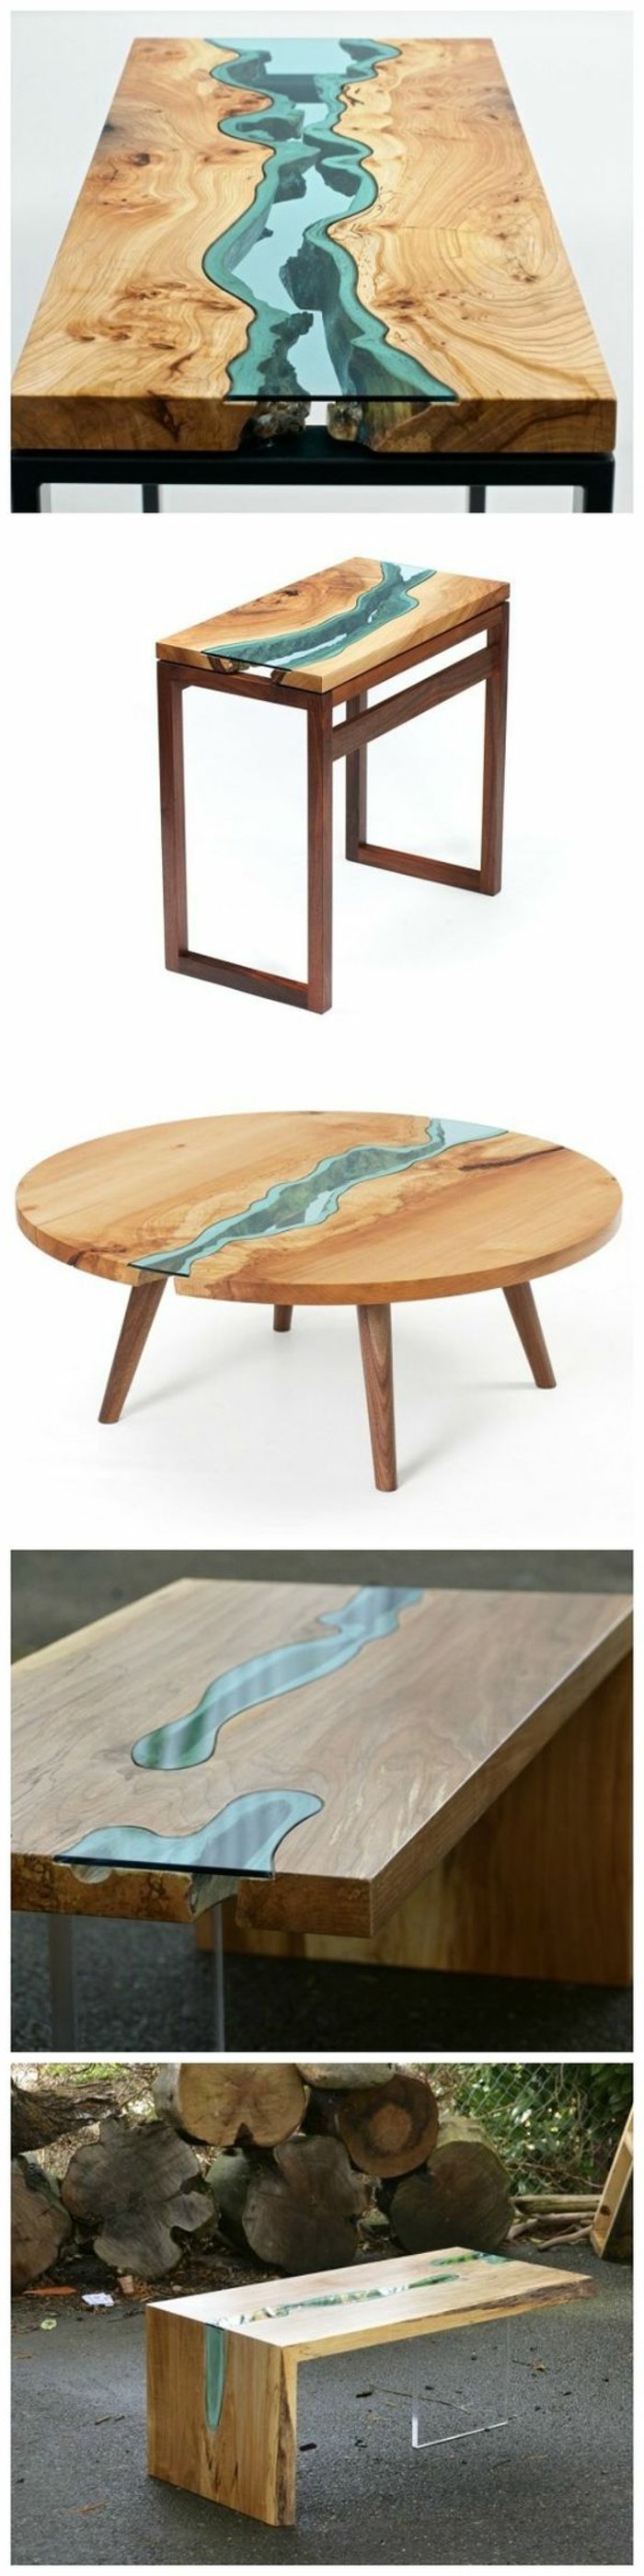 DIY-Moebel-יצירתי-wohnideen-שולחן-של-עץ-זכוכית-עצמו-build